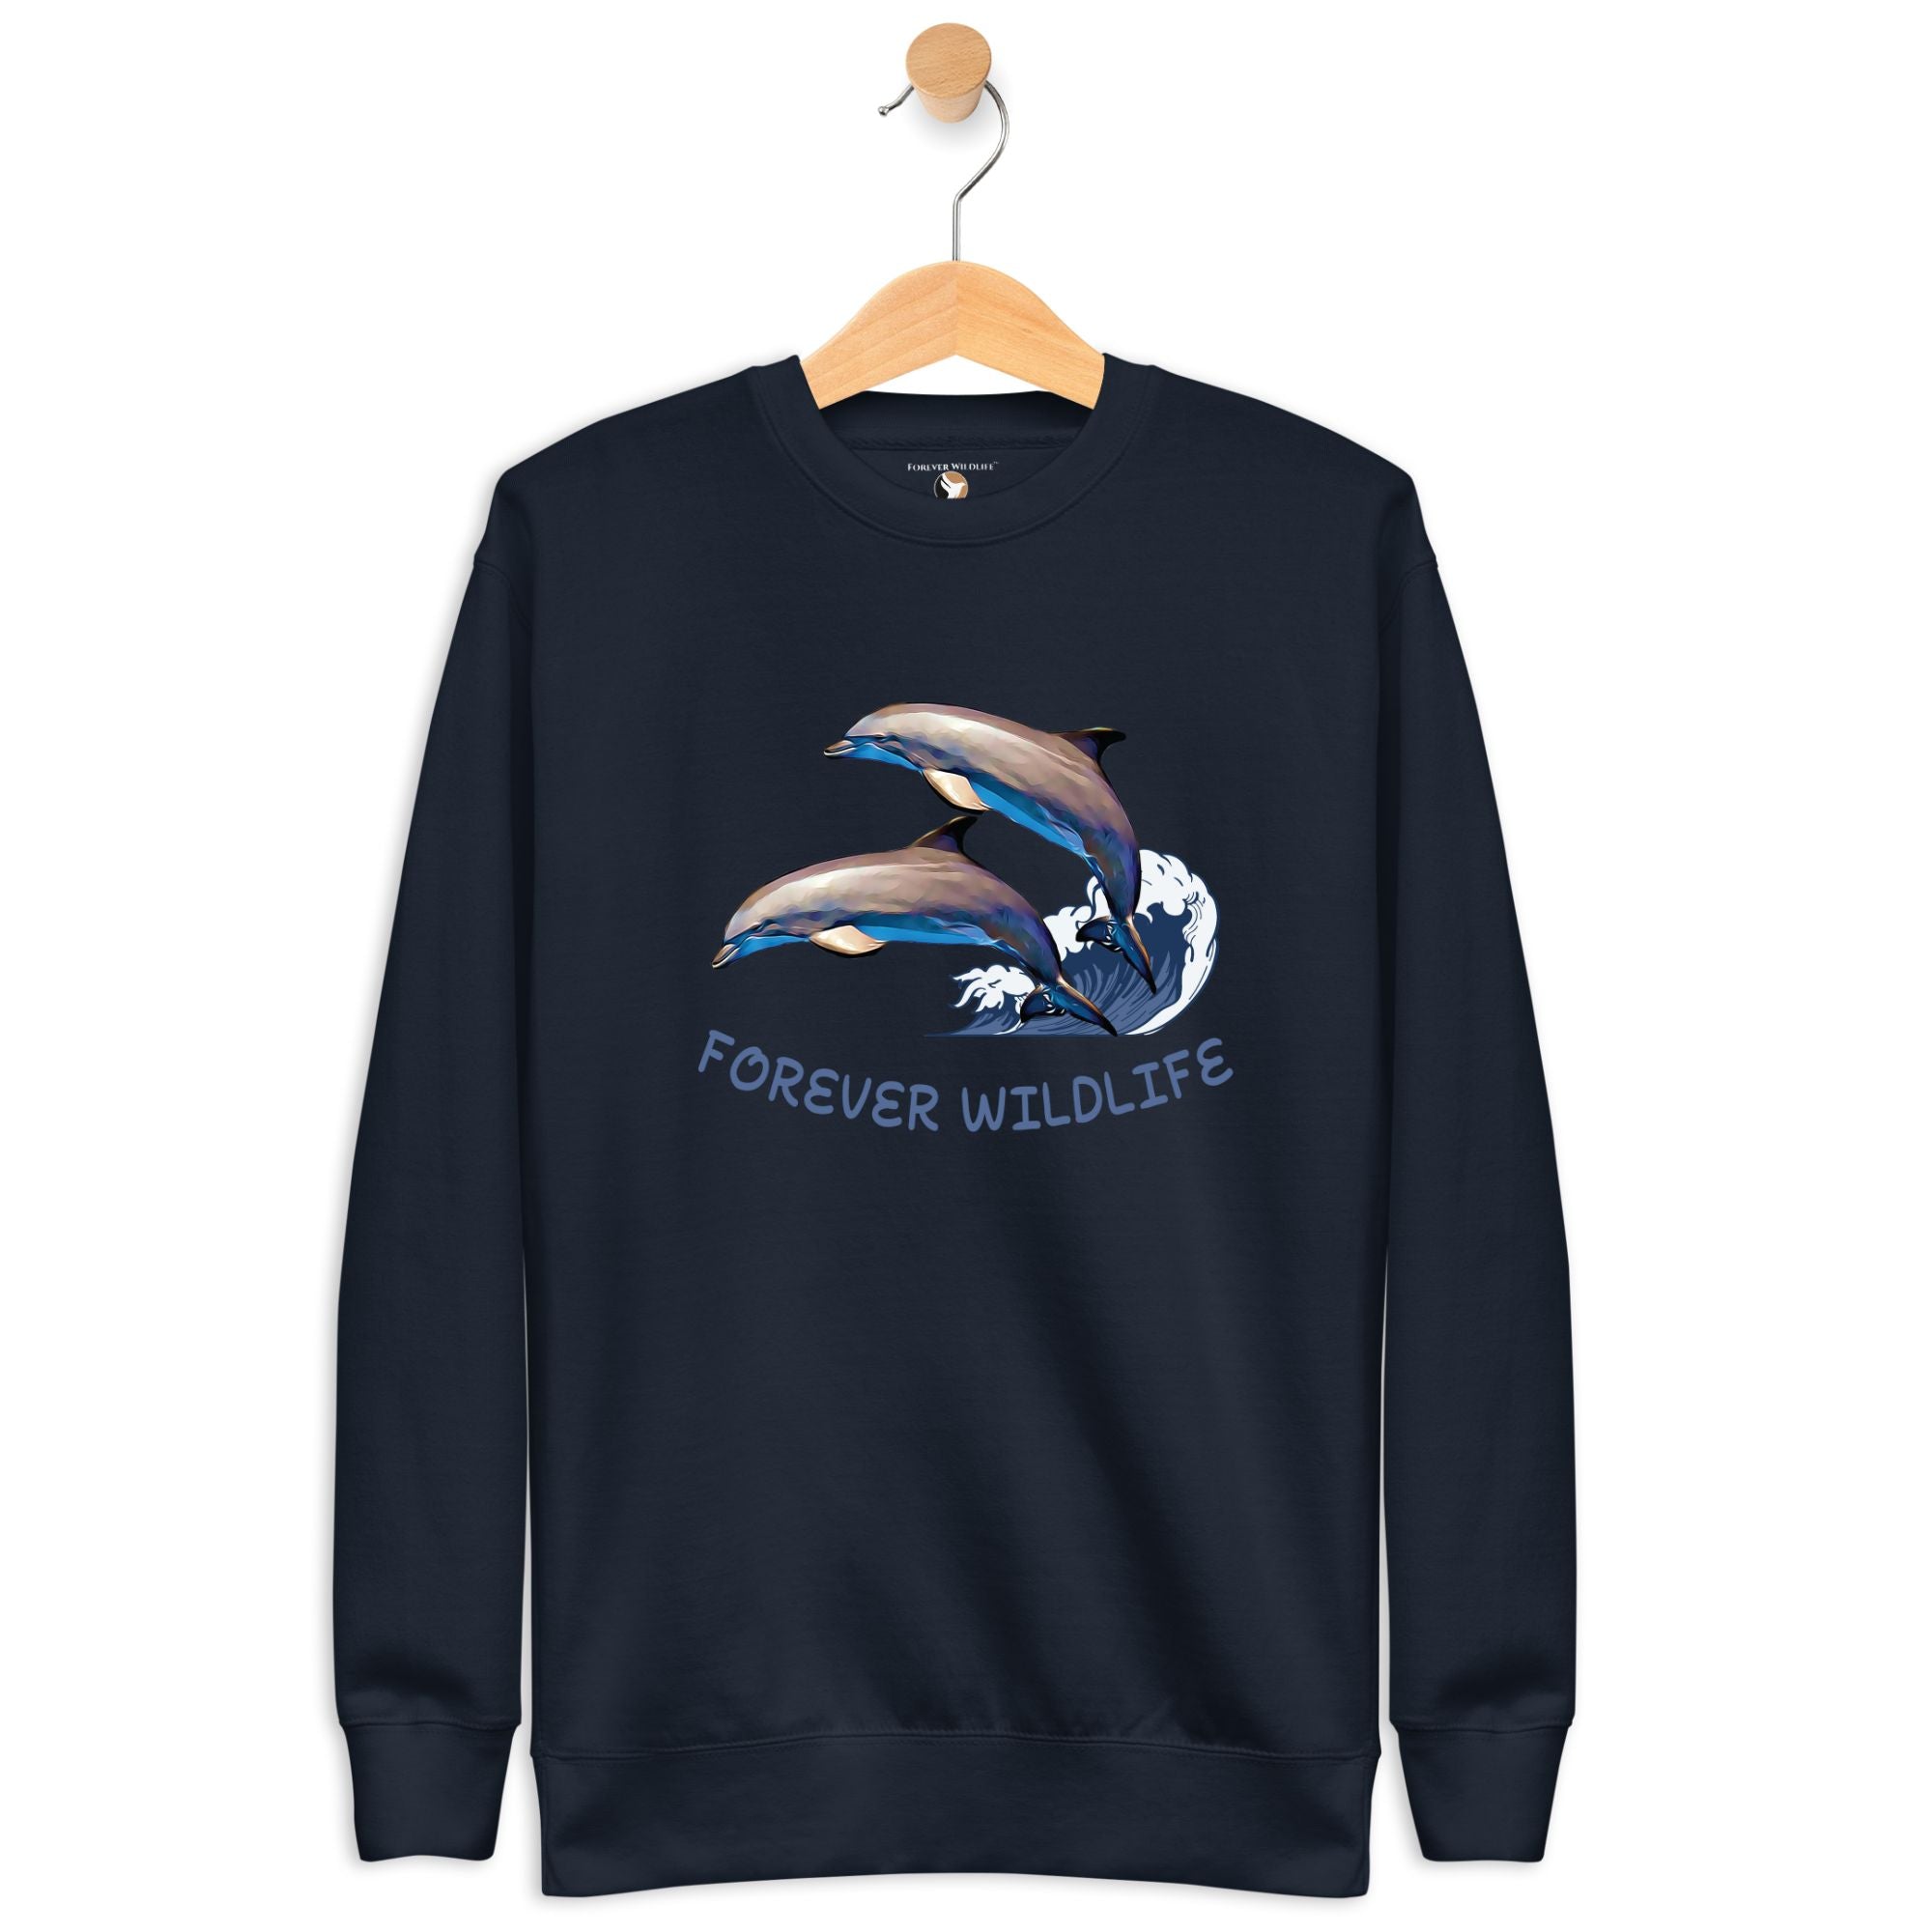 Dolphin Sweatshirt in Navy-Premium Wildlife Animal Inspiration Sweatshirt Design, part of Wildlife Sweatshirts & Clothing from Forever Wildlife.